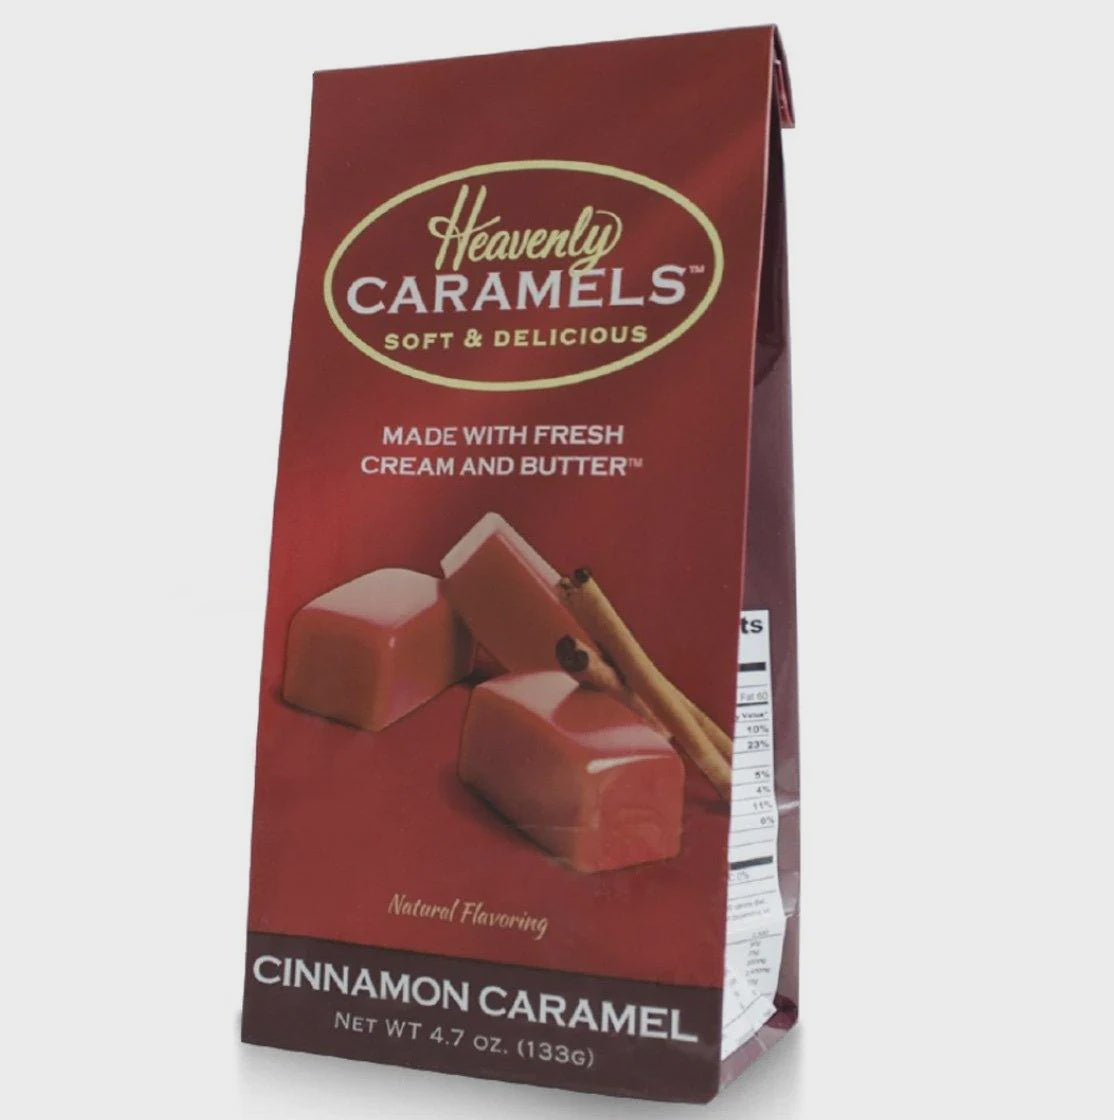 Heavenly Caramels Cinnamon Caramel 4.7oz